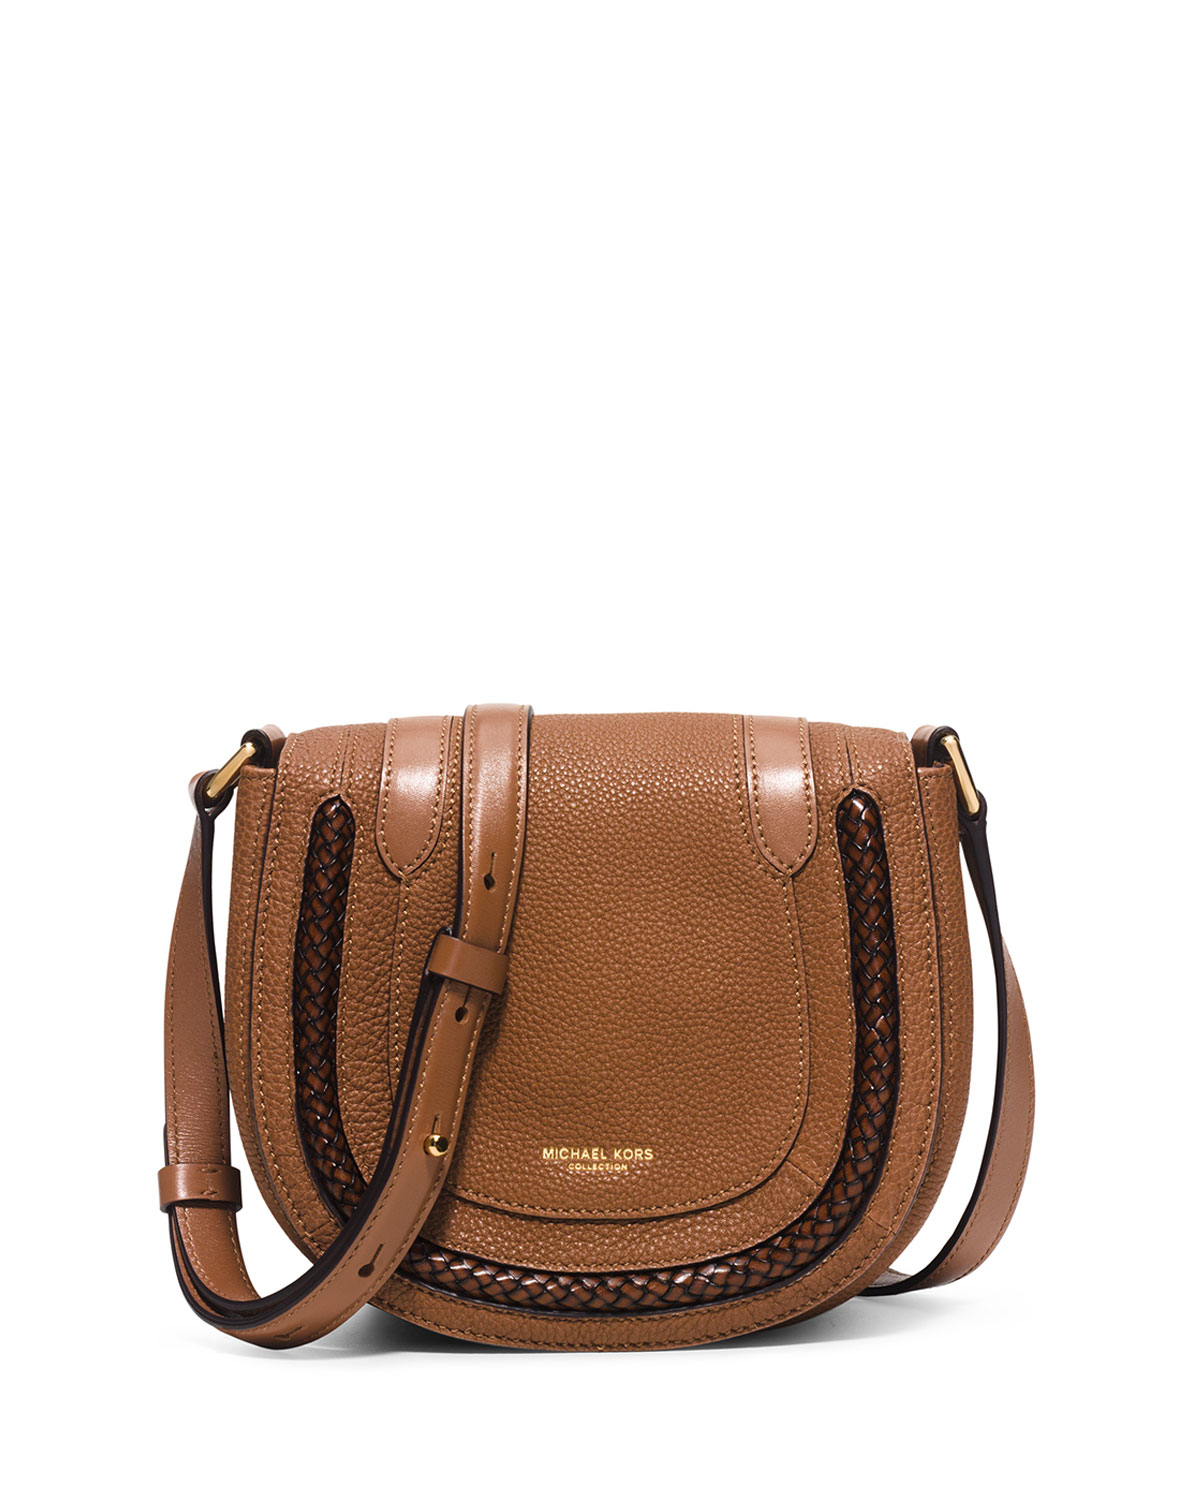 Michael kors Skorpios Small Textured-leather Shoulder Bag in Brown | Lyst